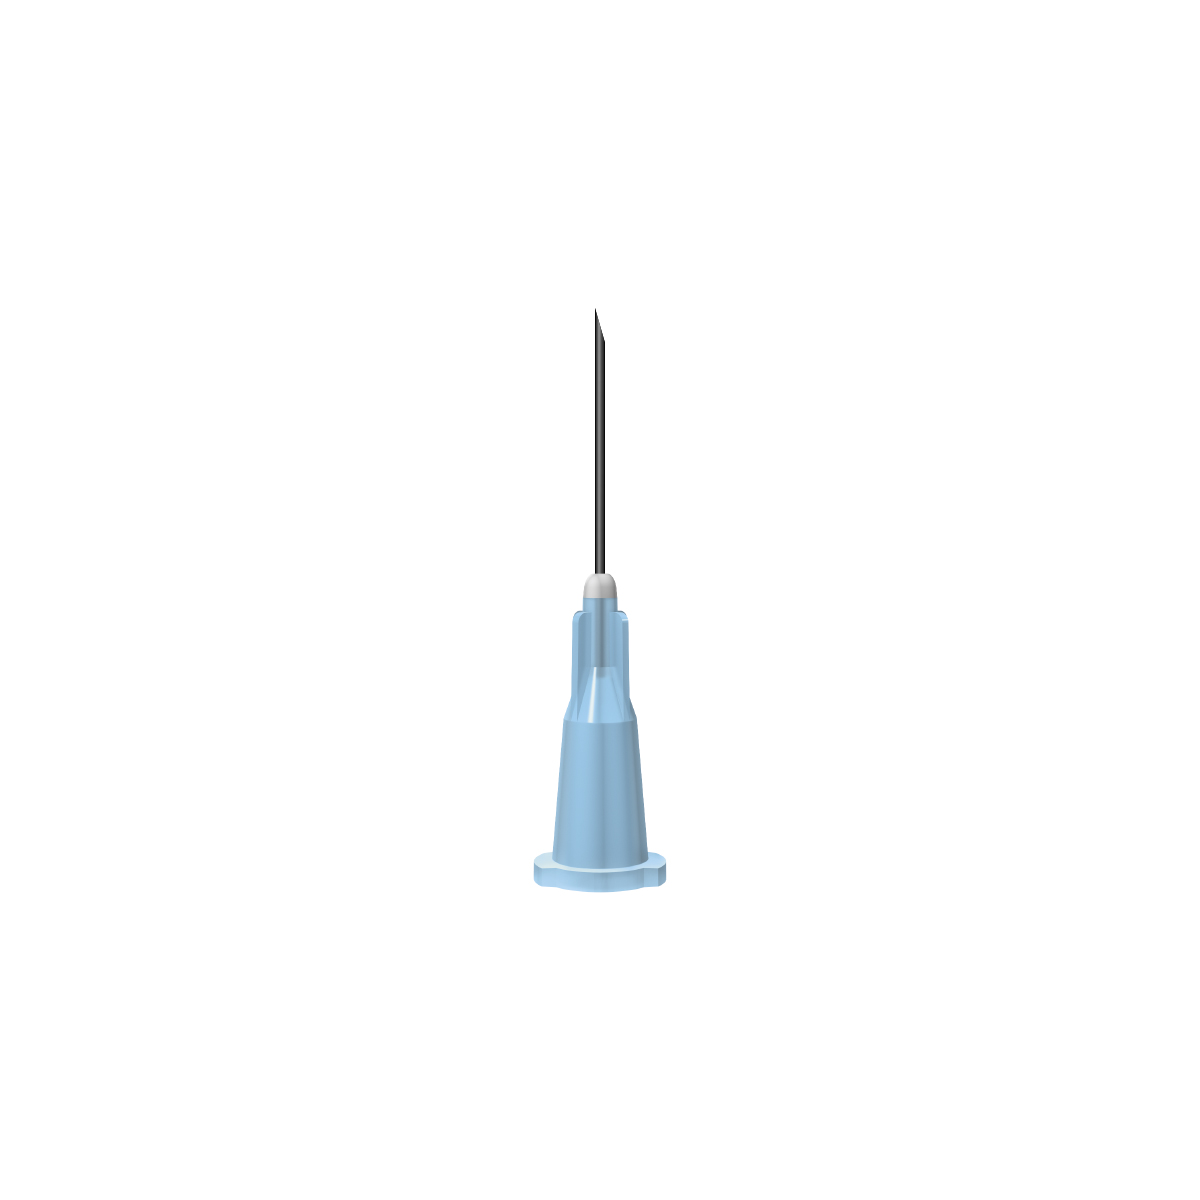 Terumo: Blue 23G 16mm (⅝ inch) needle